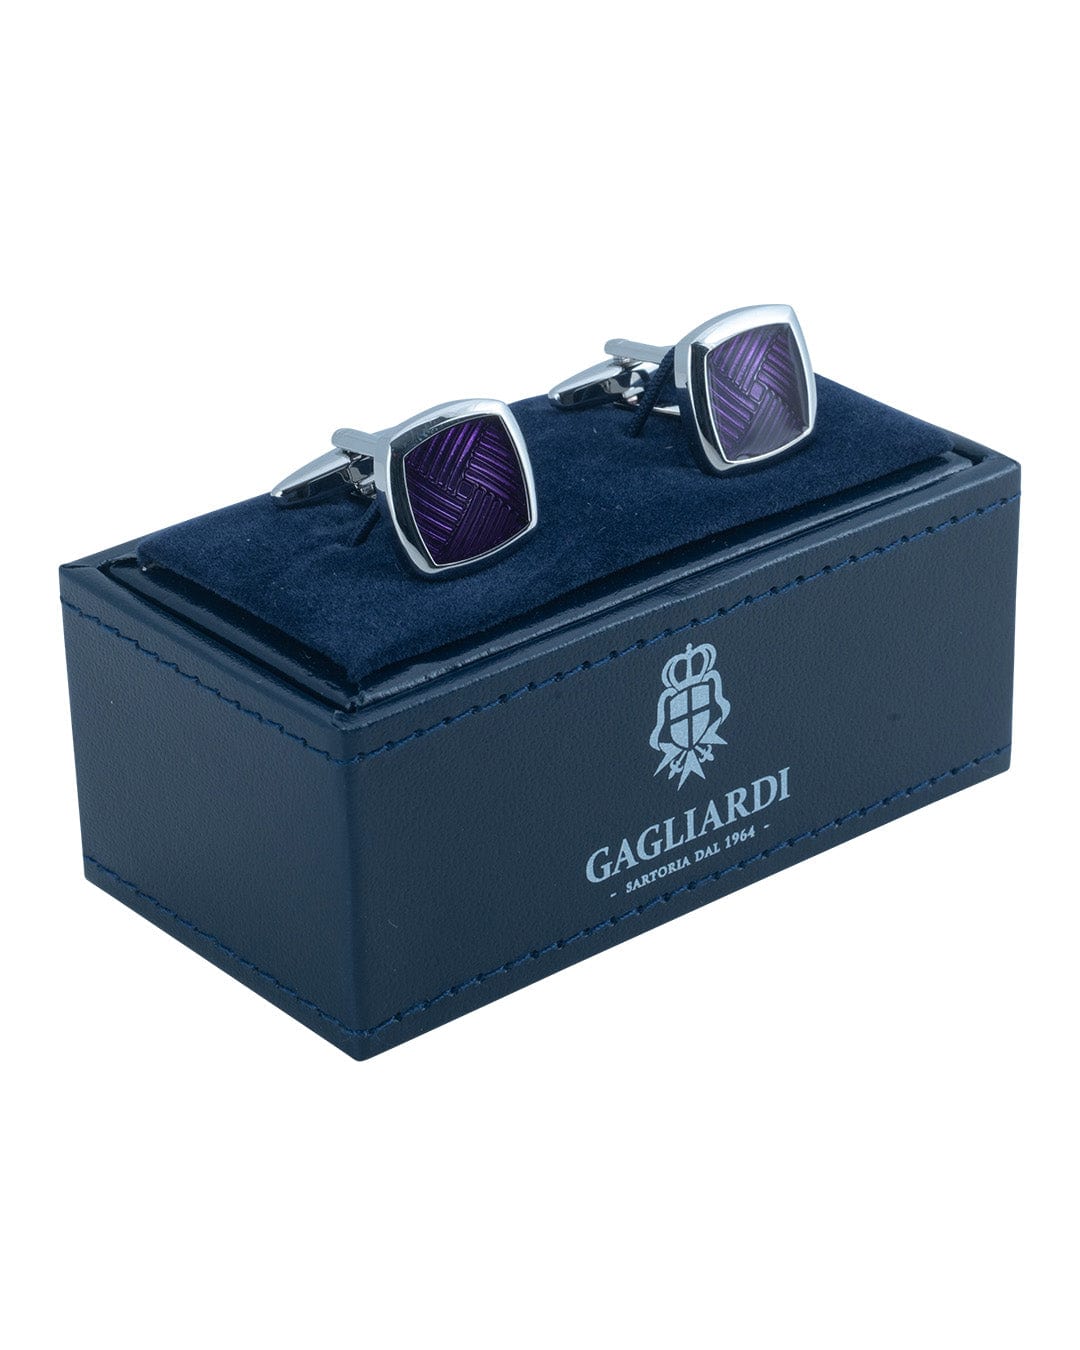 Gagliardi Cufflinks ONE Gagliardi Square Cufflinks With Purple Textured Enamel Centre